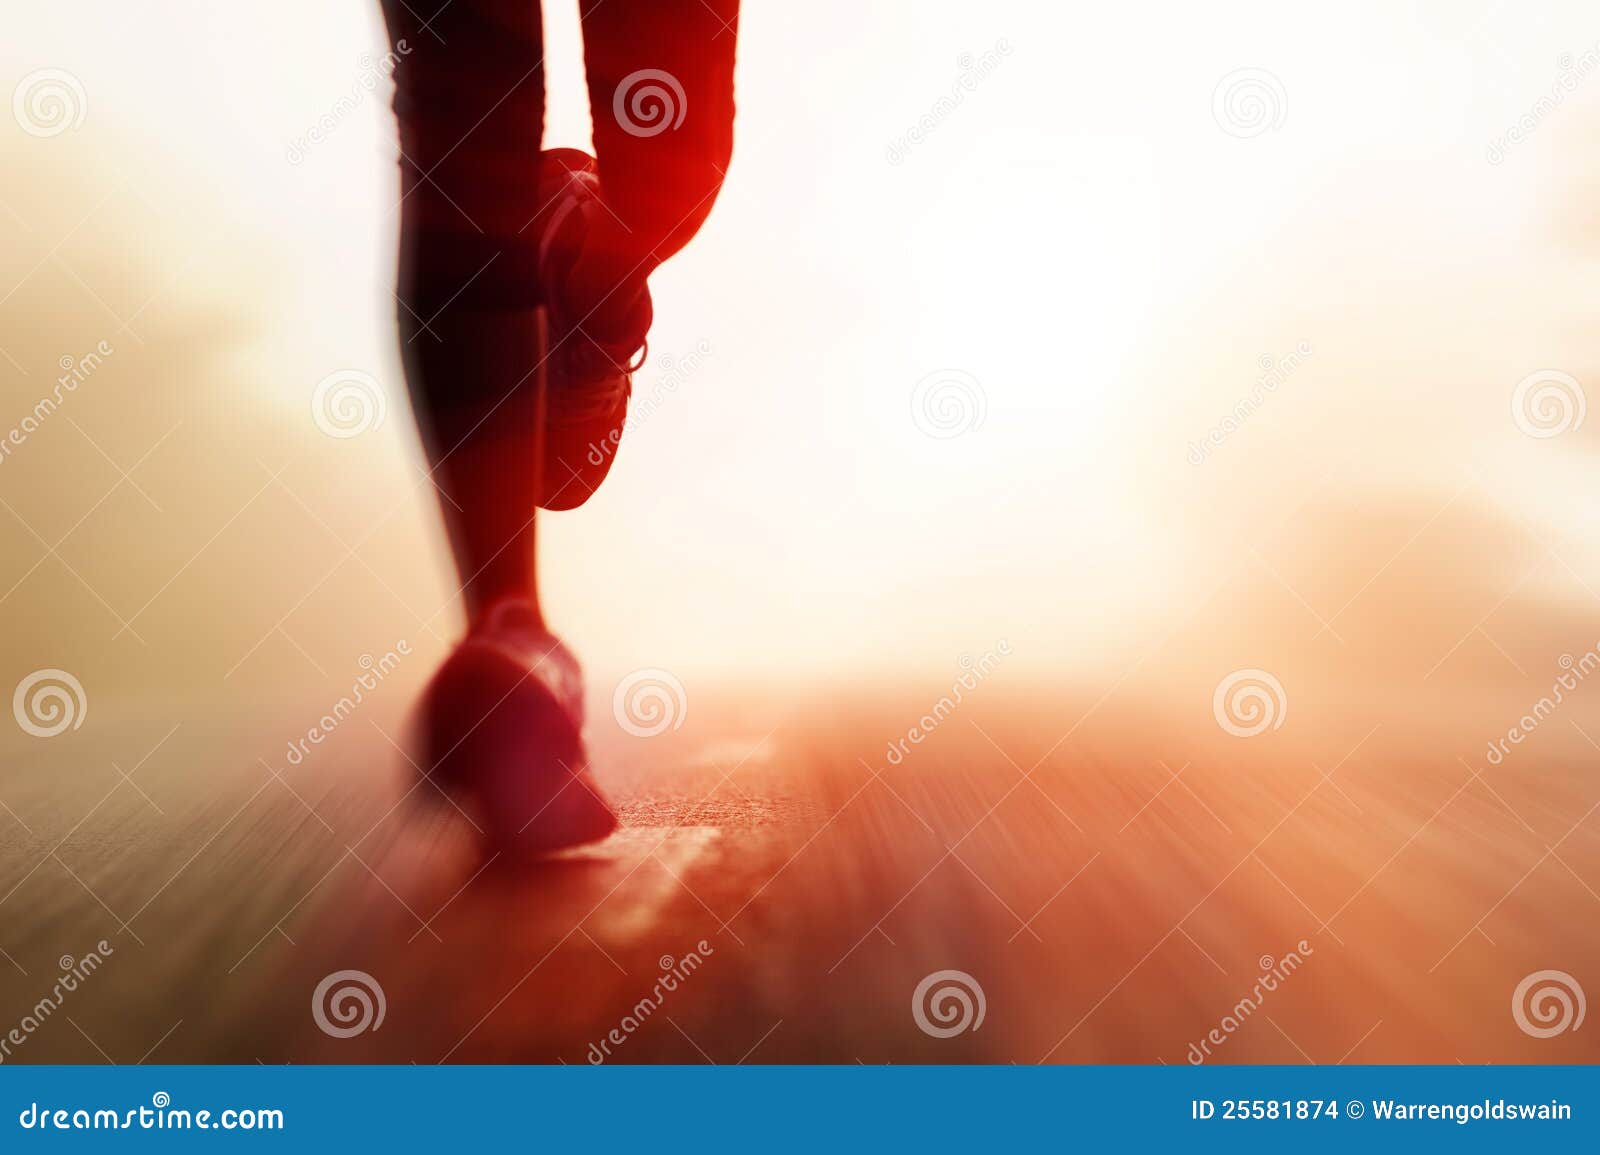 athlete running road silhouette